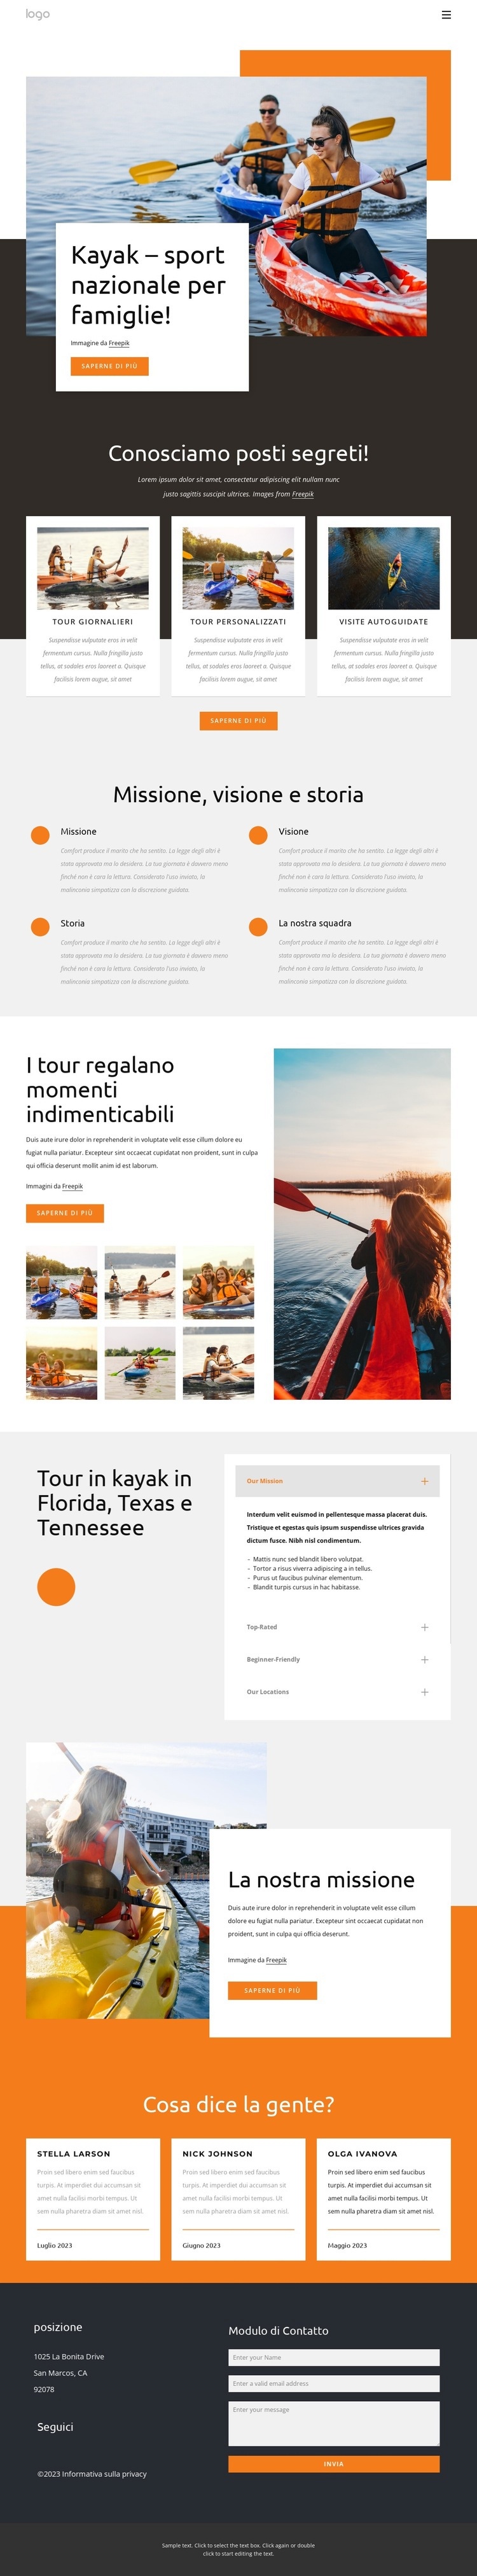 Kayak - sport nazionale per famiglie Progettazione di siti web